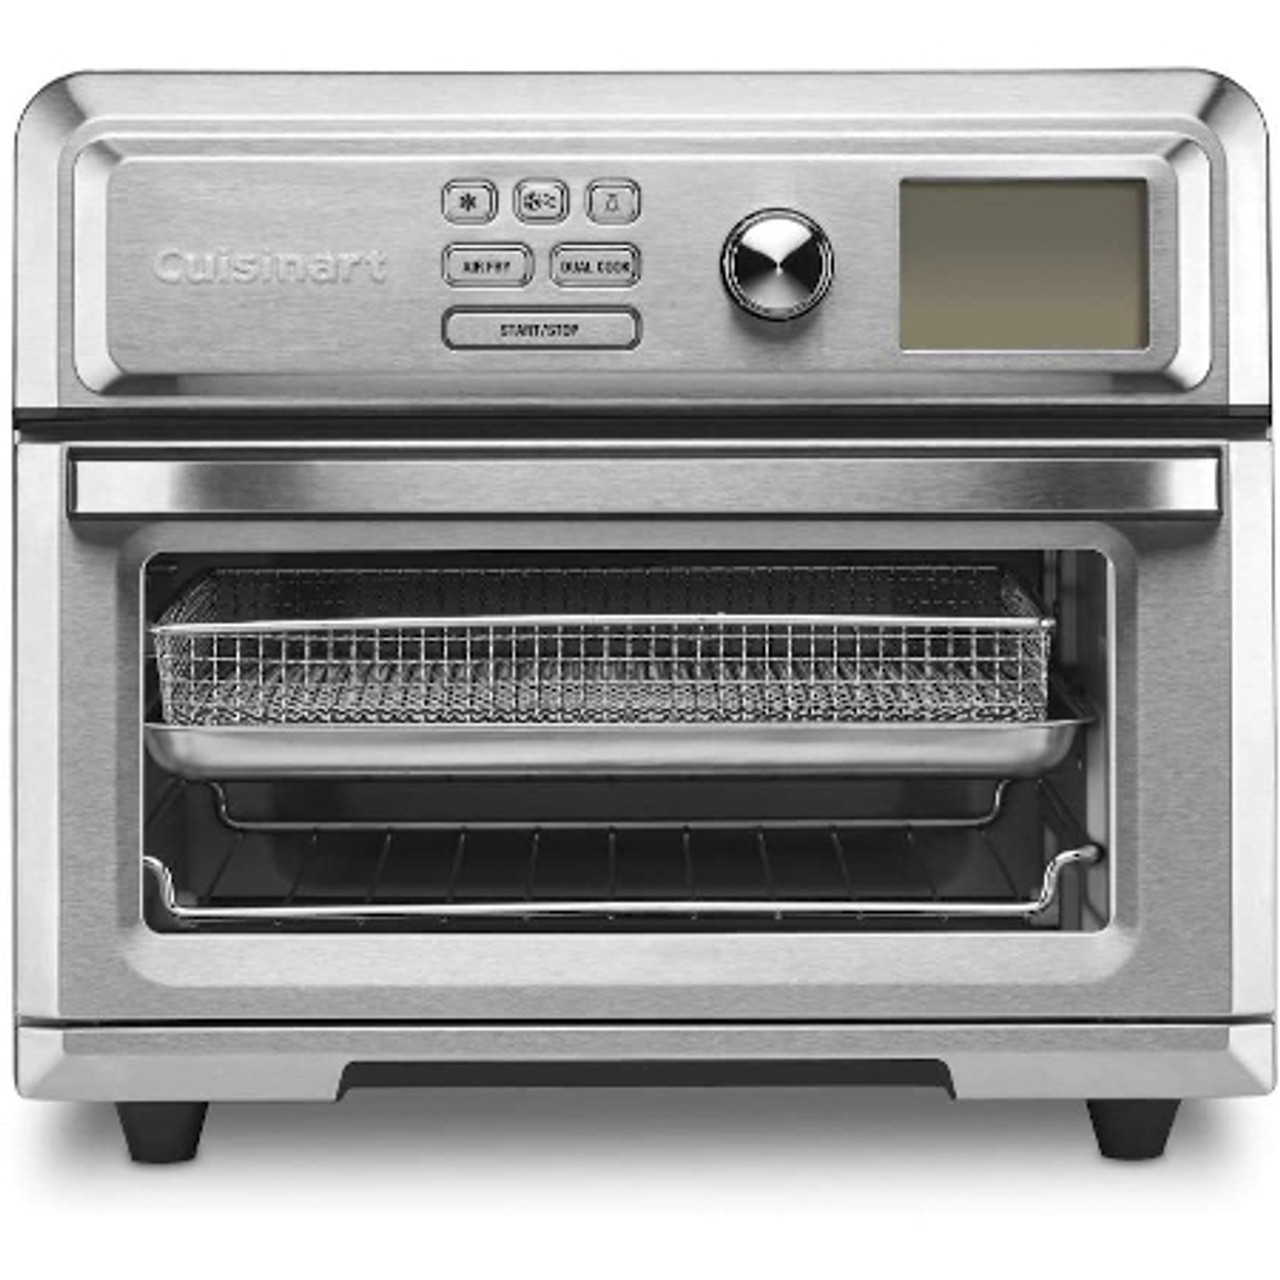 Air Fryer vs. Toaster Oven Air Fryer